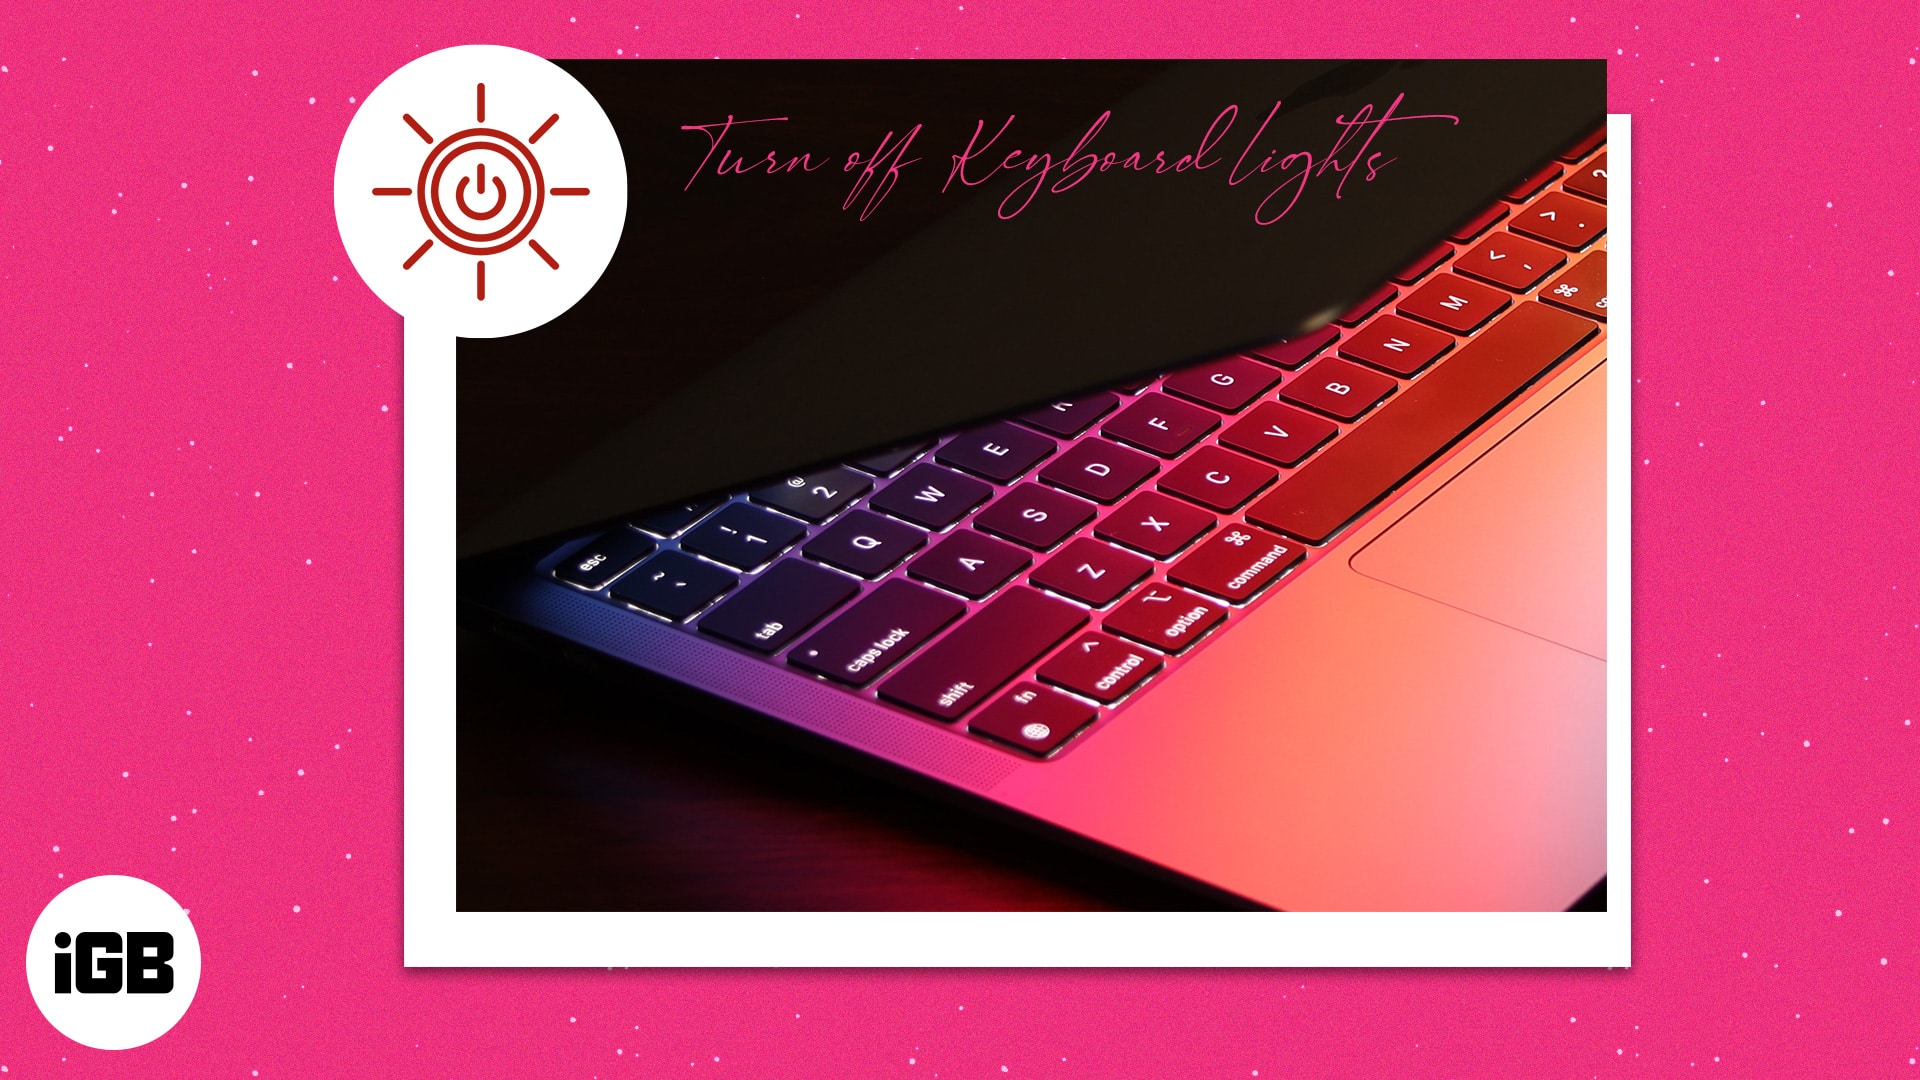 Turn off keyboard lights